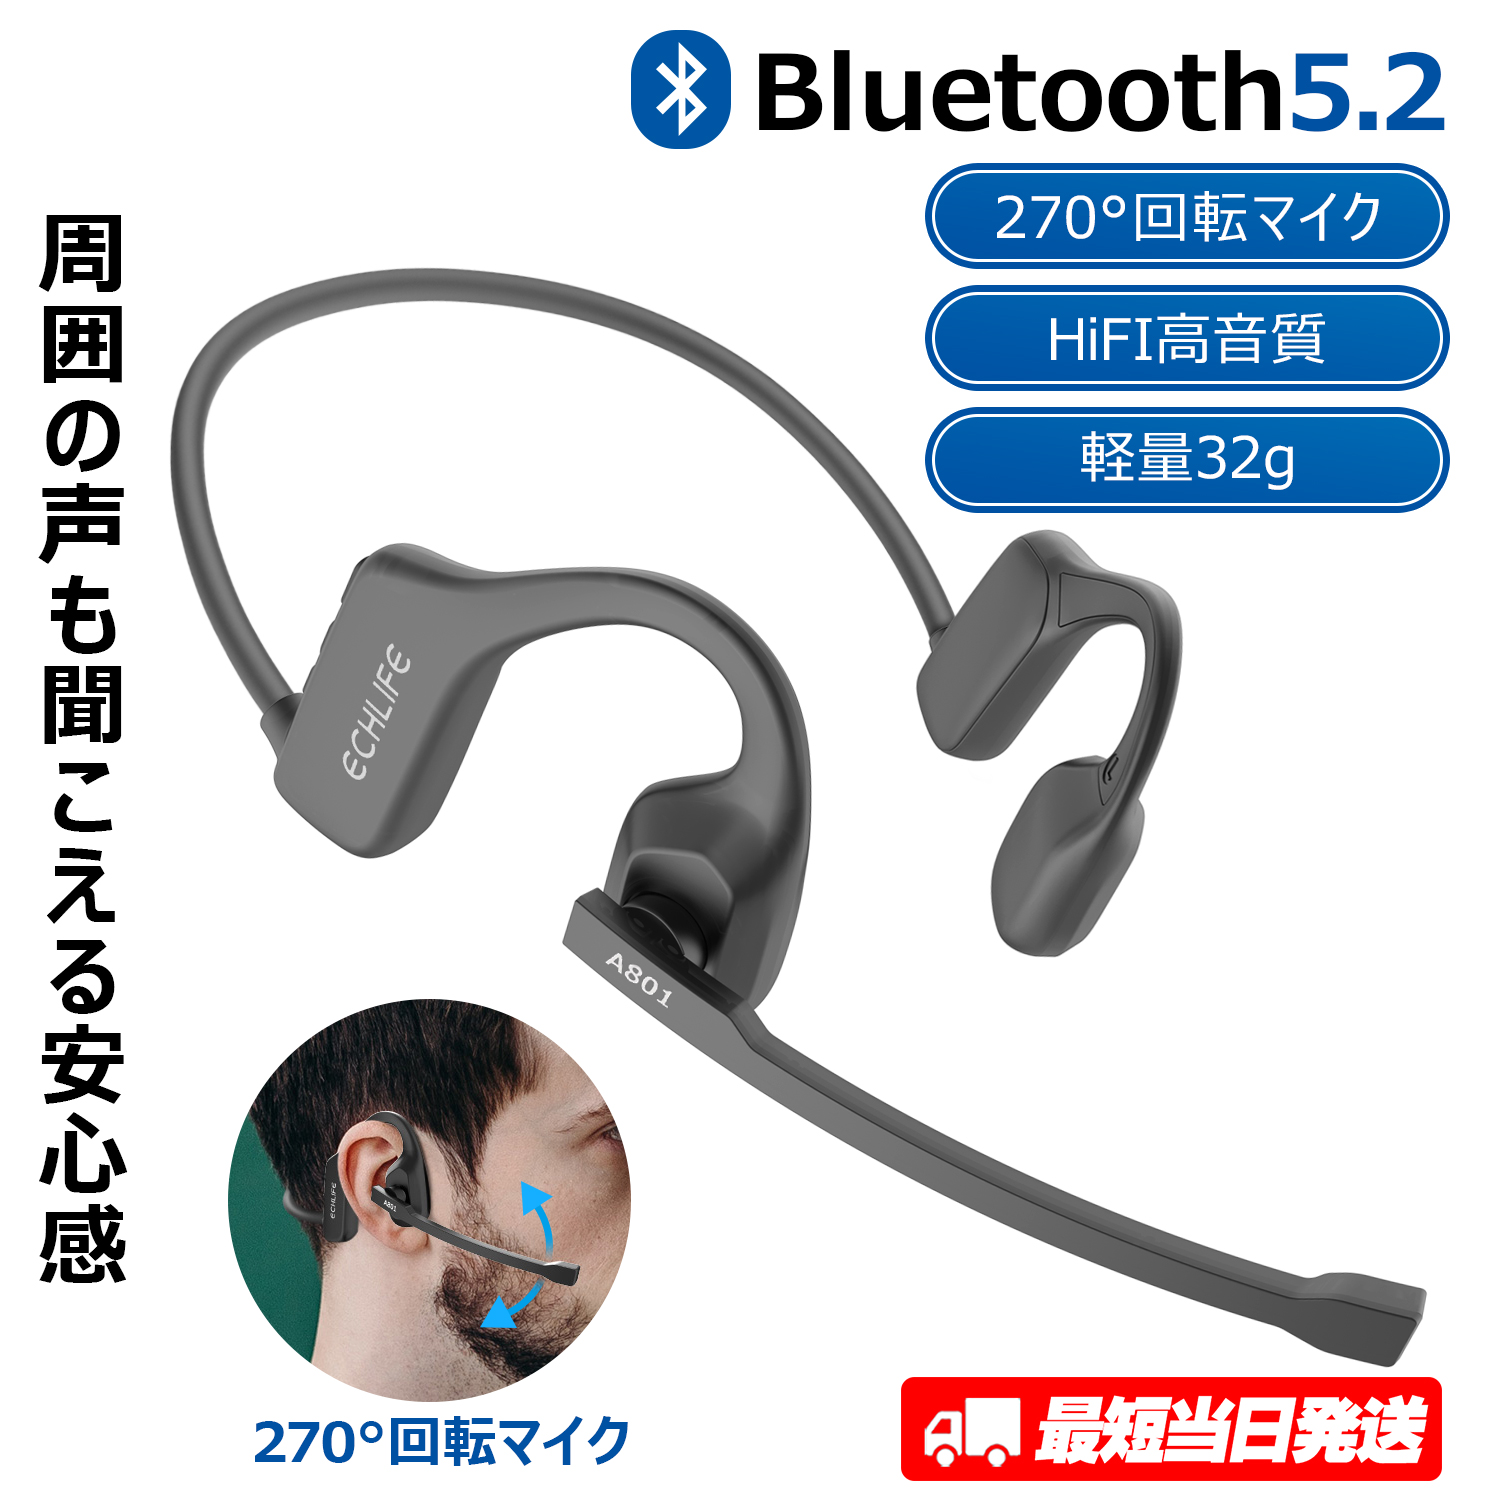  беспроводной headset Mike имеется беспроводной слуховай аппарат Bluetooth слуховай аппарат bluetooth headset легкий 32g водонепроницаемый ... слуховай аппарат 